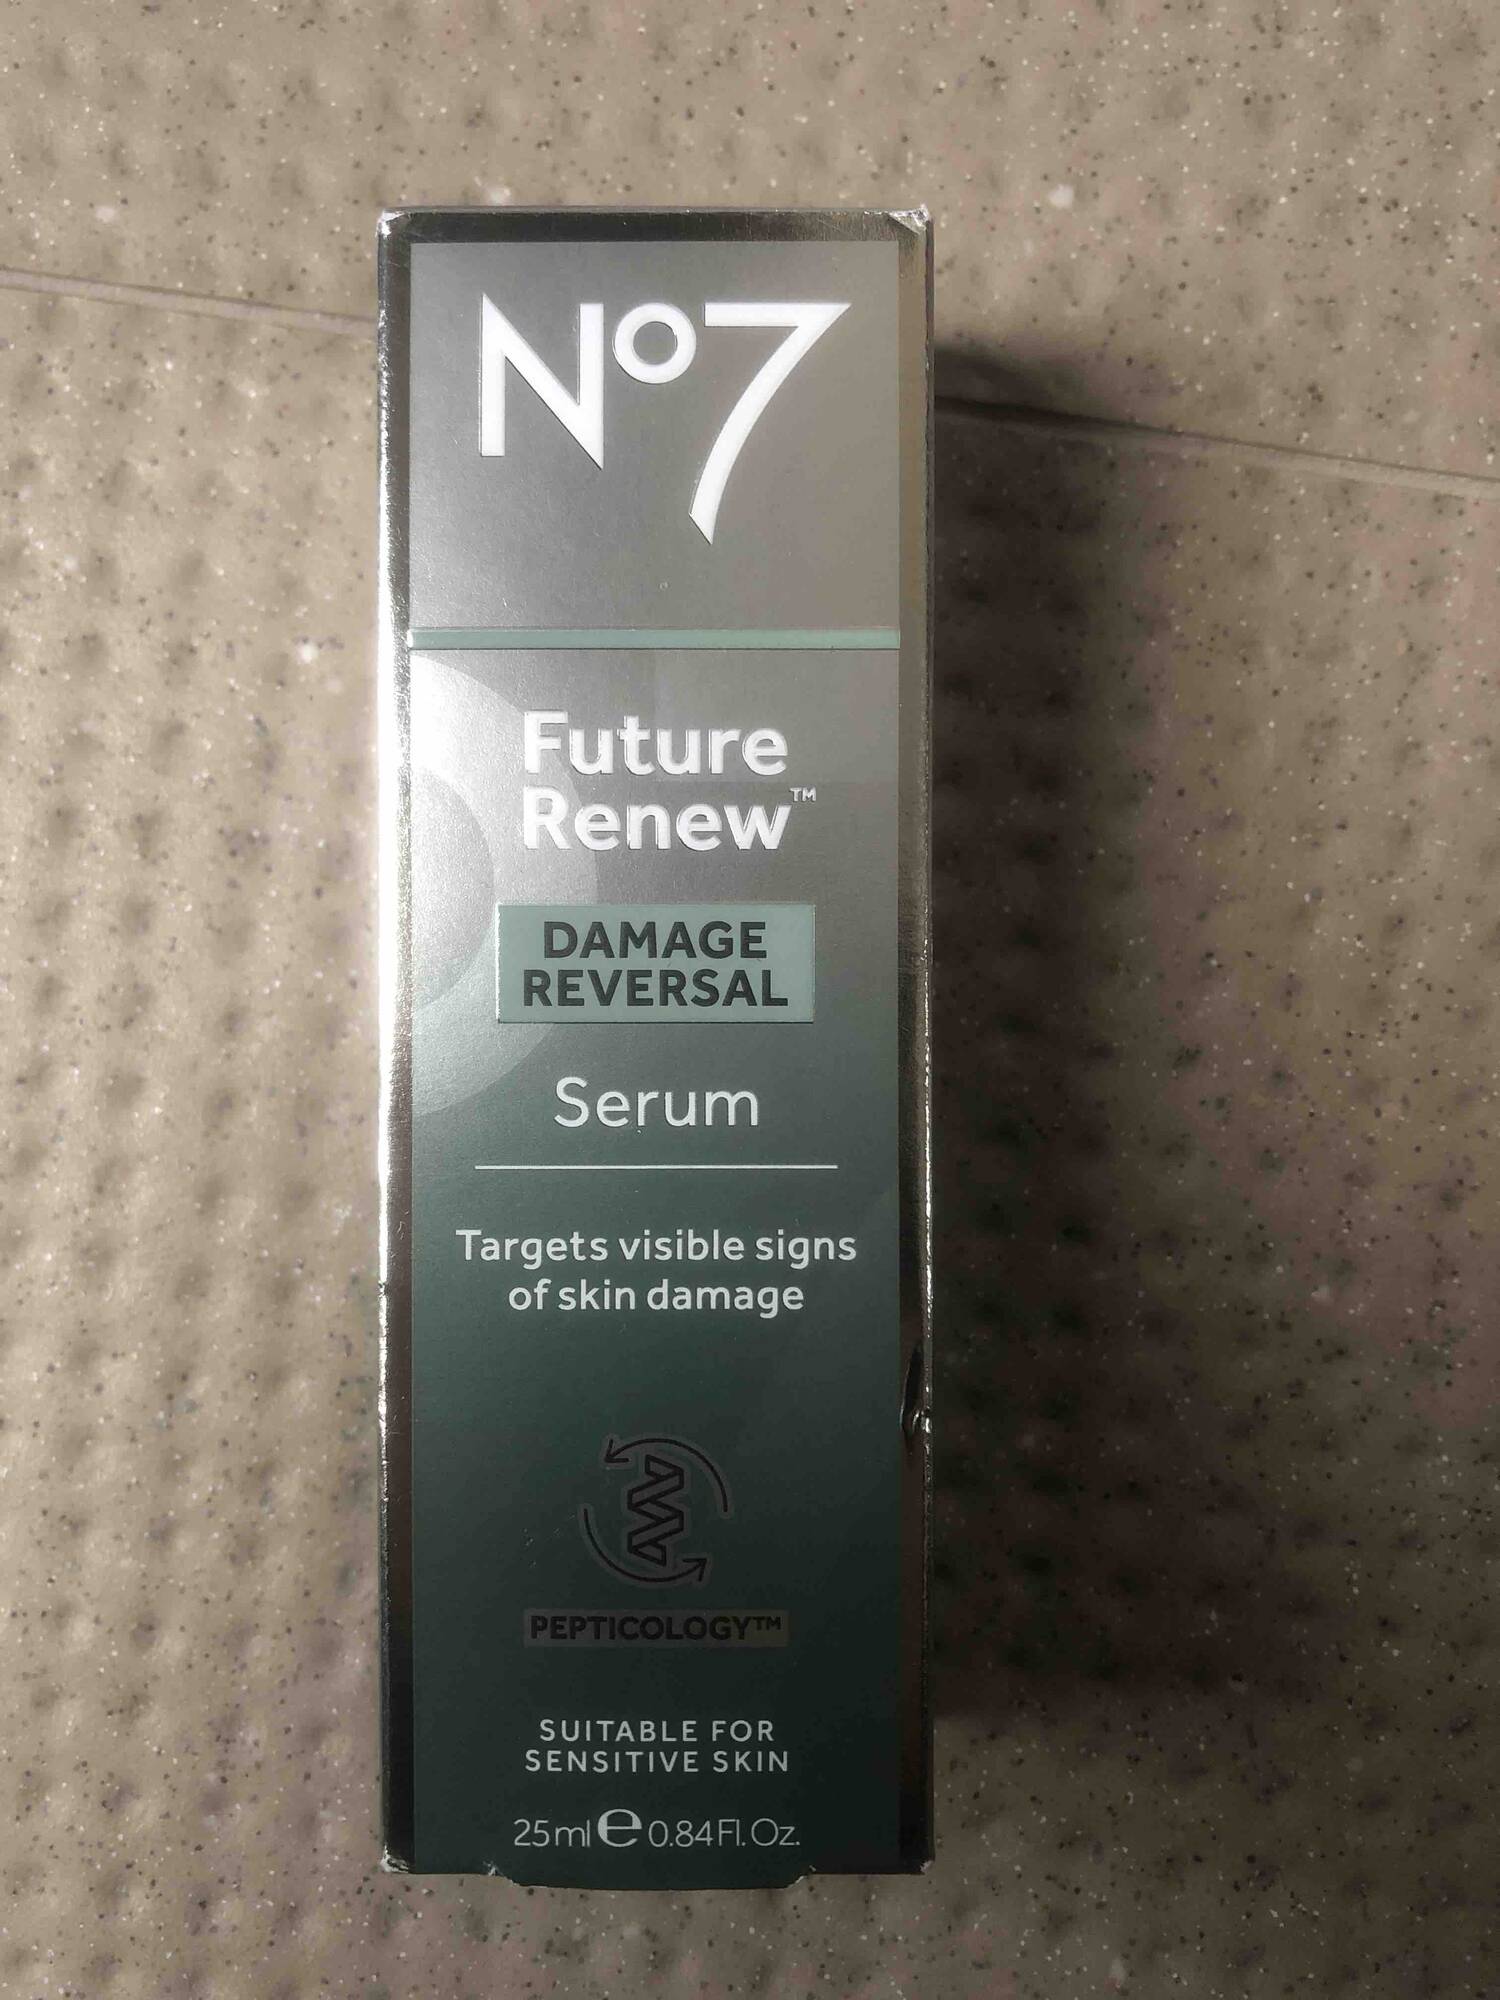 N°7 - Future renew_Damage reversal serum